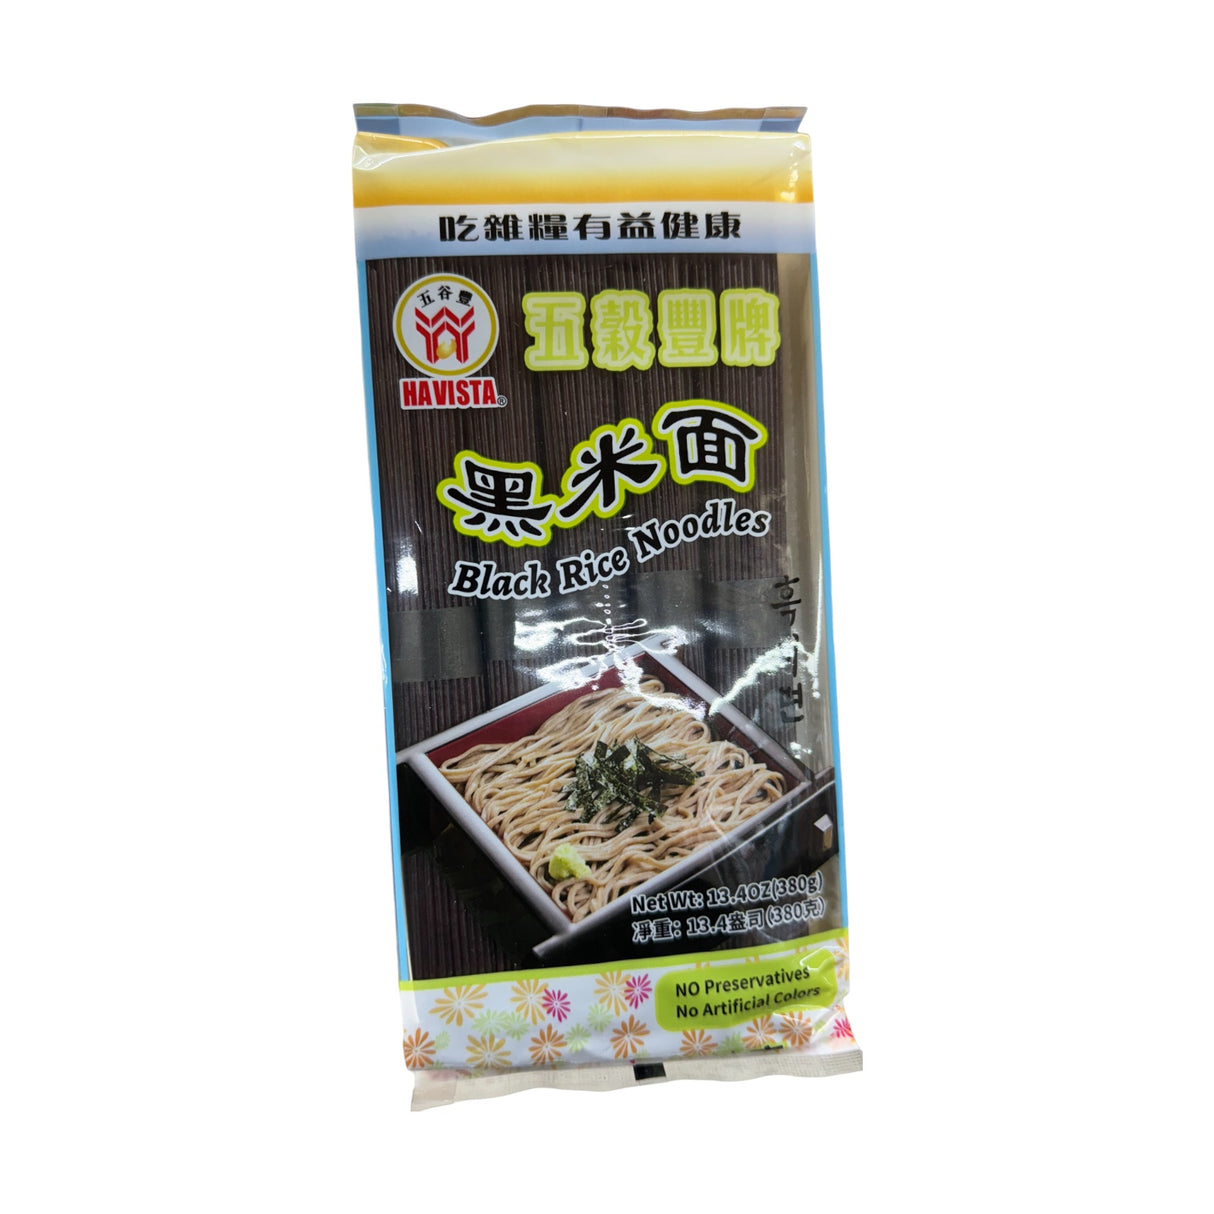 Havista Black Rice Noodles